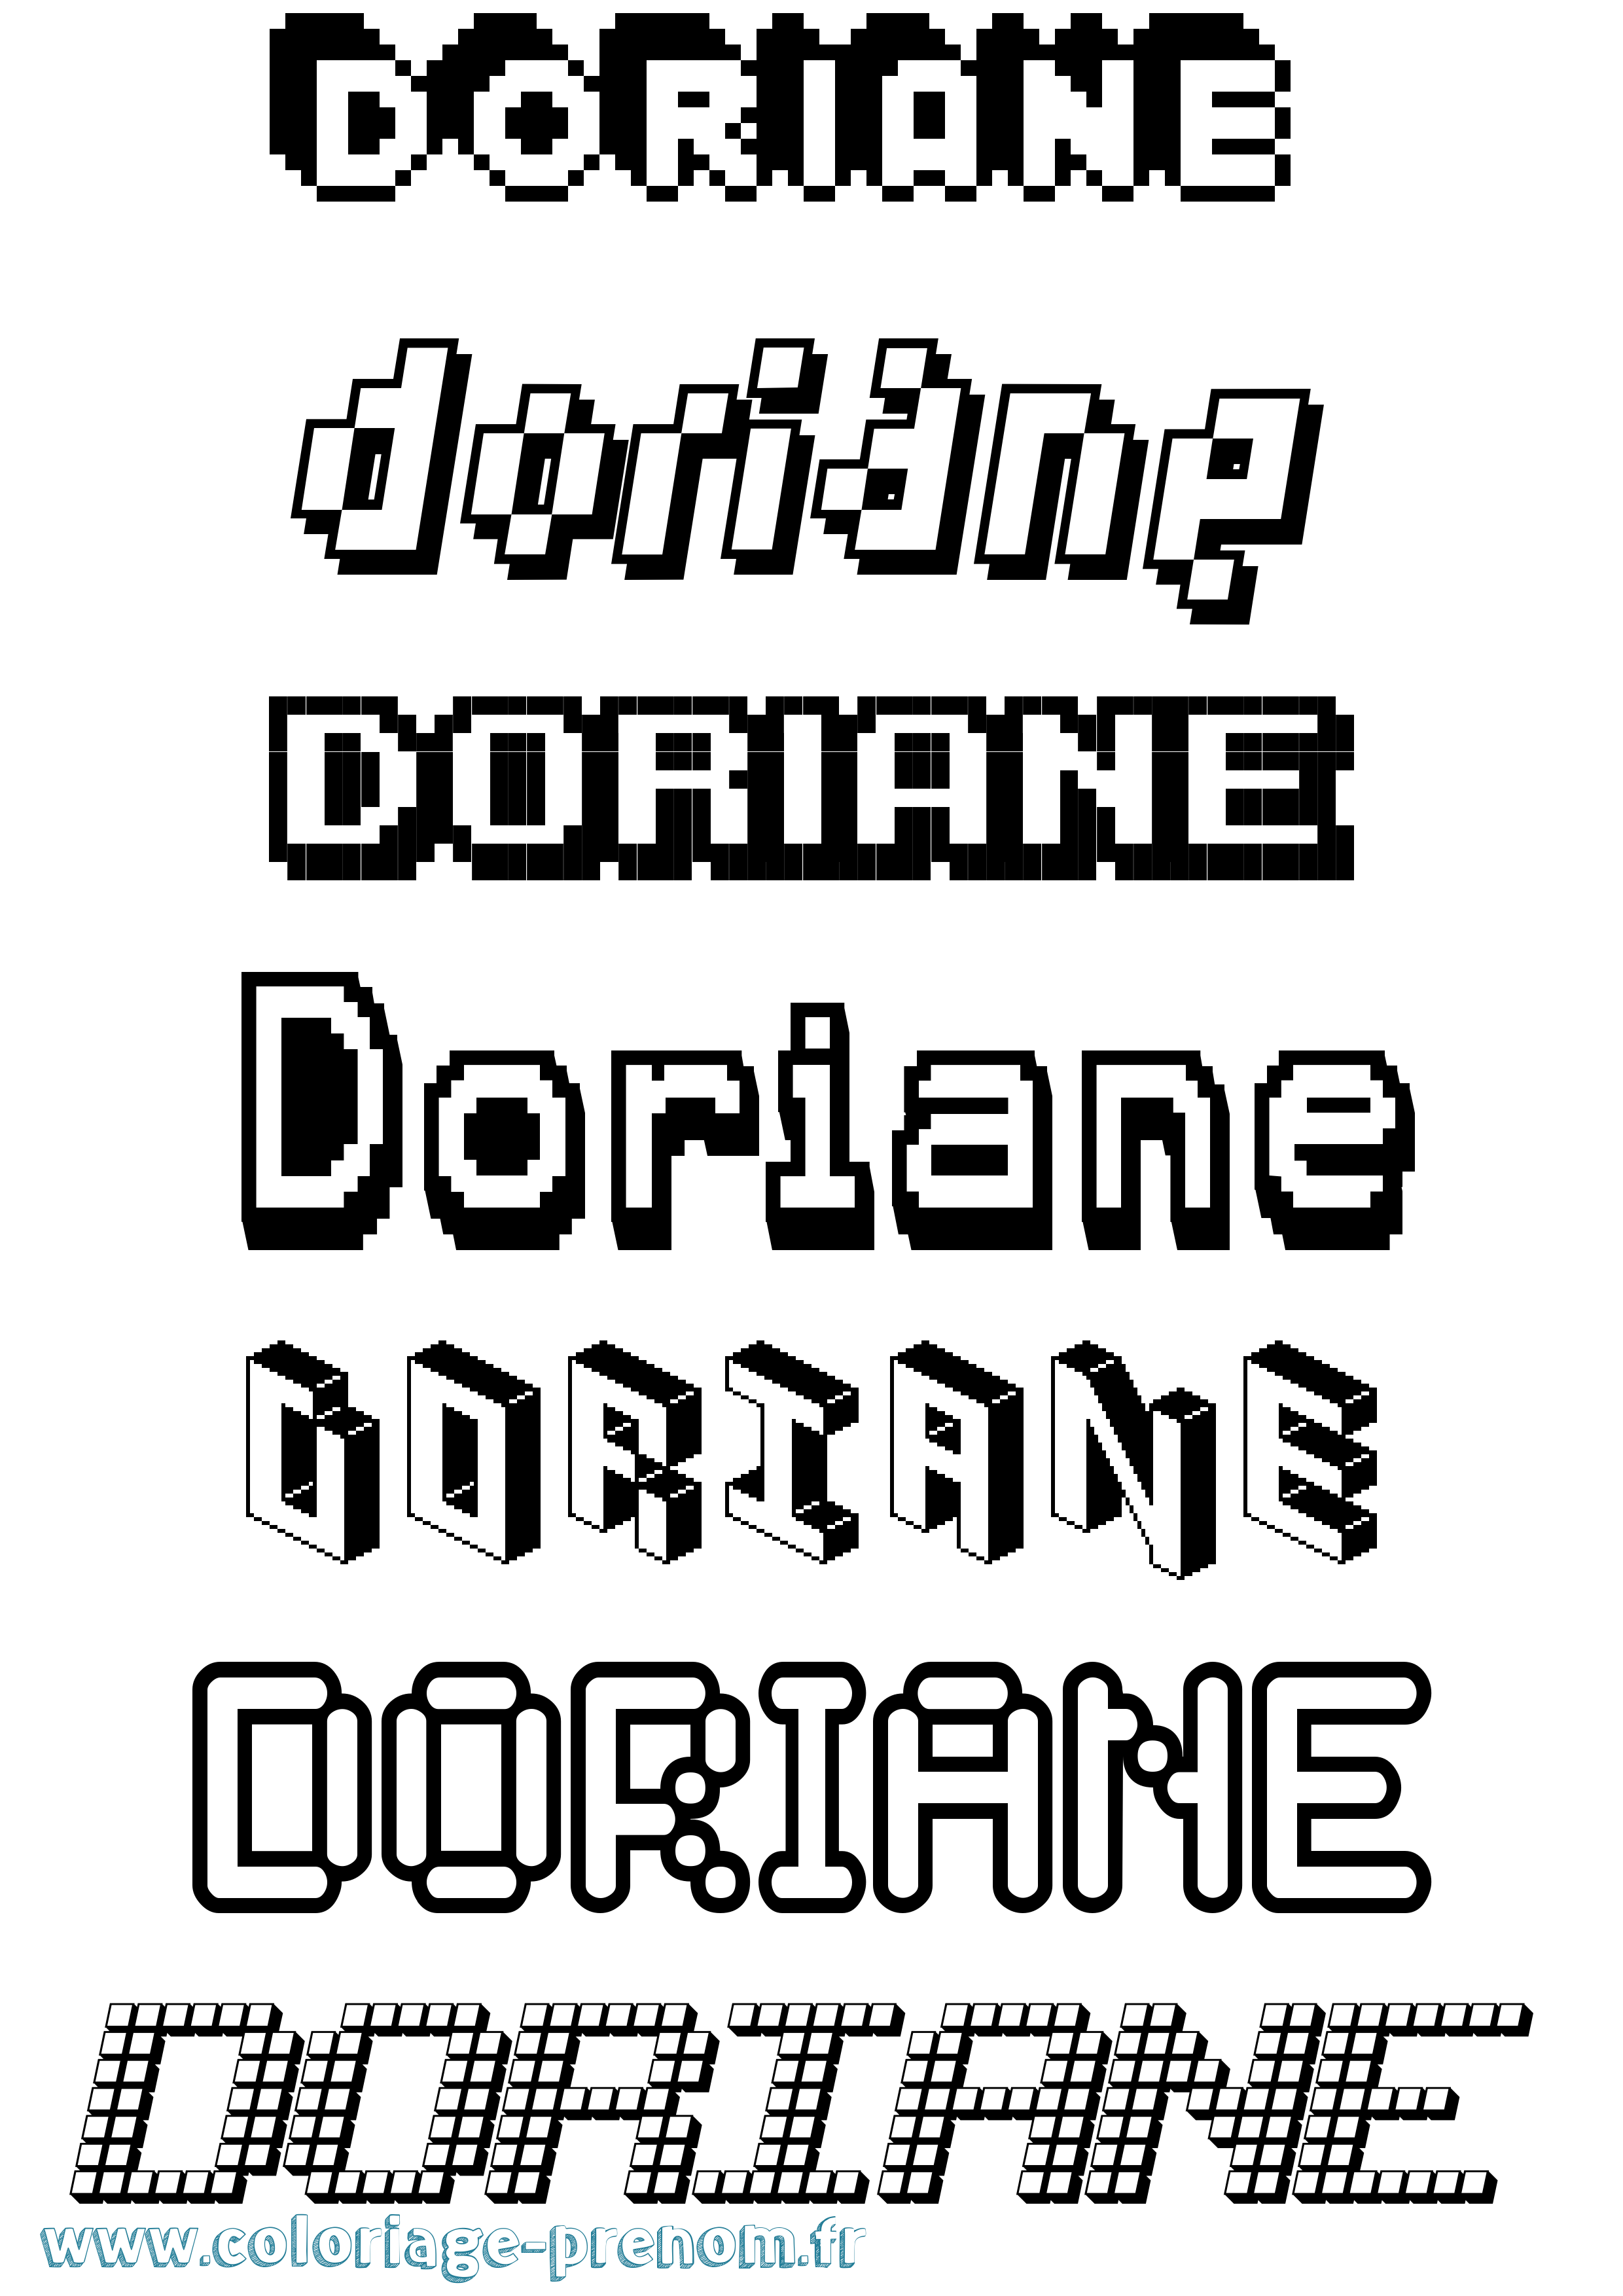 Coloriage prénom Doriane Pixel